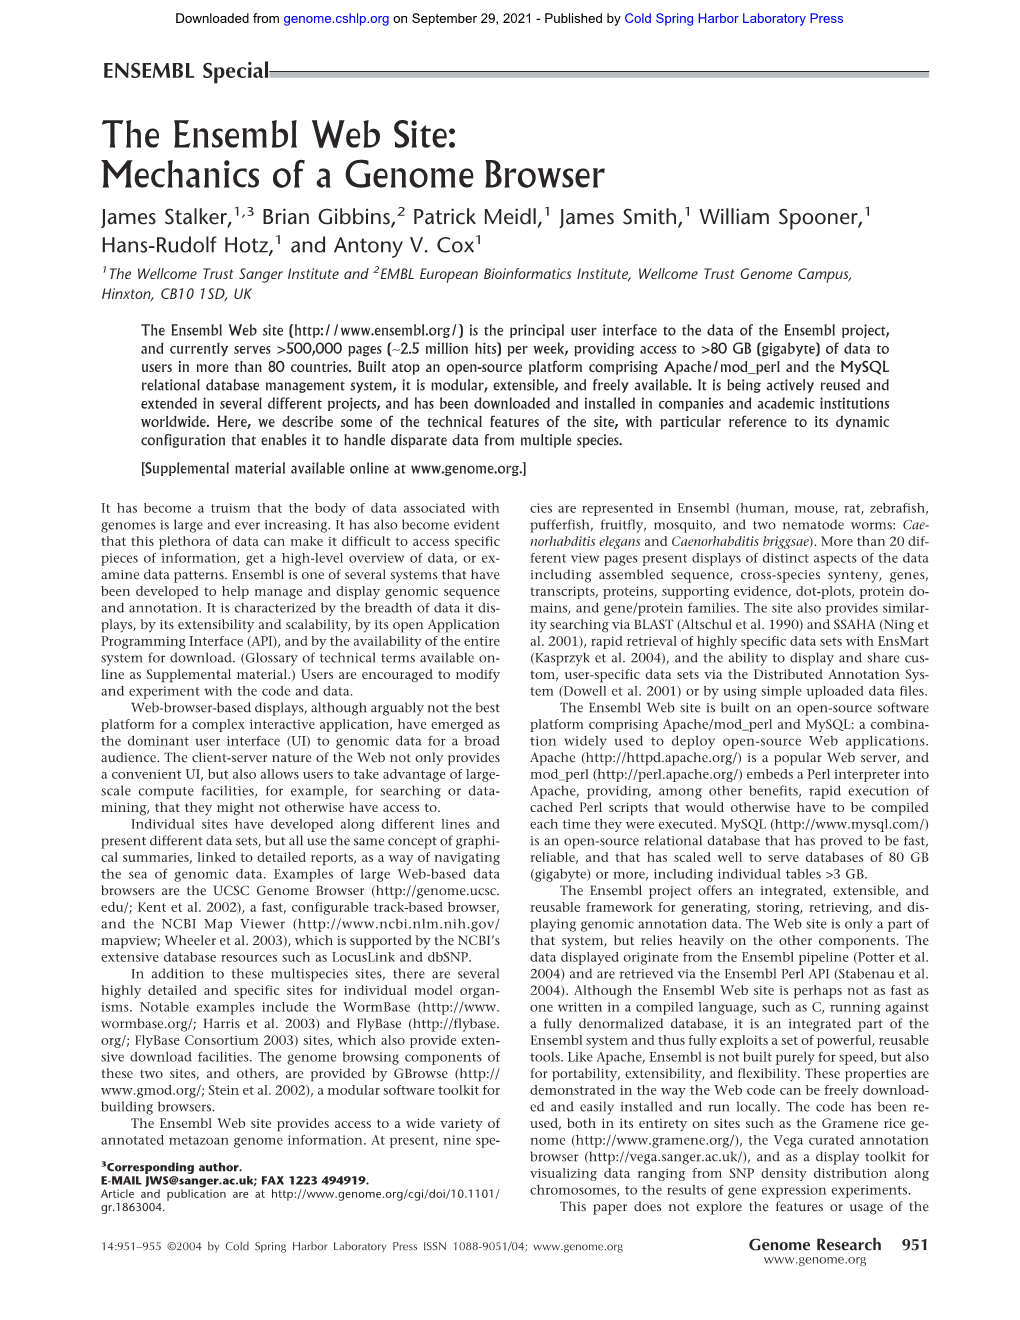 The Ensembl Web Site: Mechanics of a Genome Browser James Stalker,1,3 Brian Gibbins,2 Patrick Meidl,1 James Smith,1 William Spooner,1 Hans-Rudolf Hotz,1 and Antony V